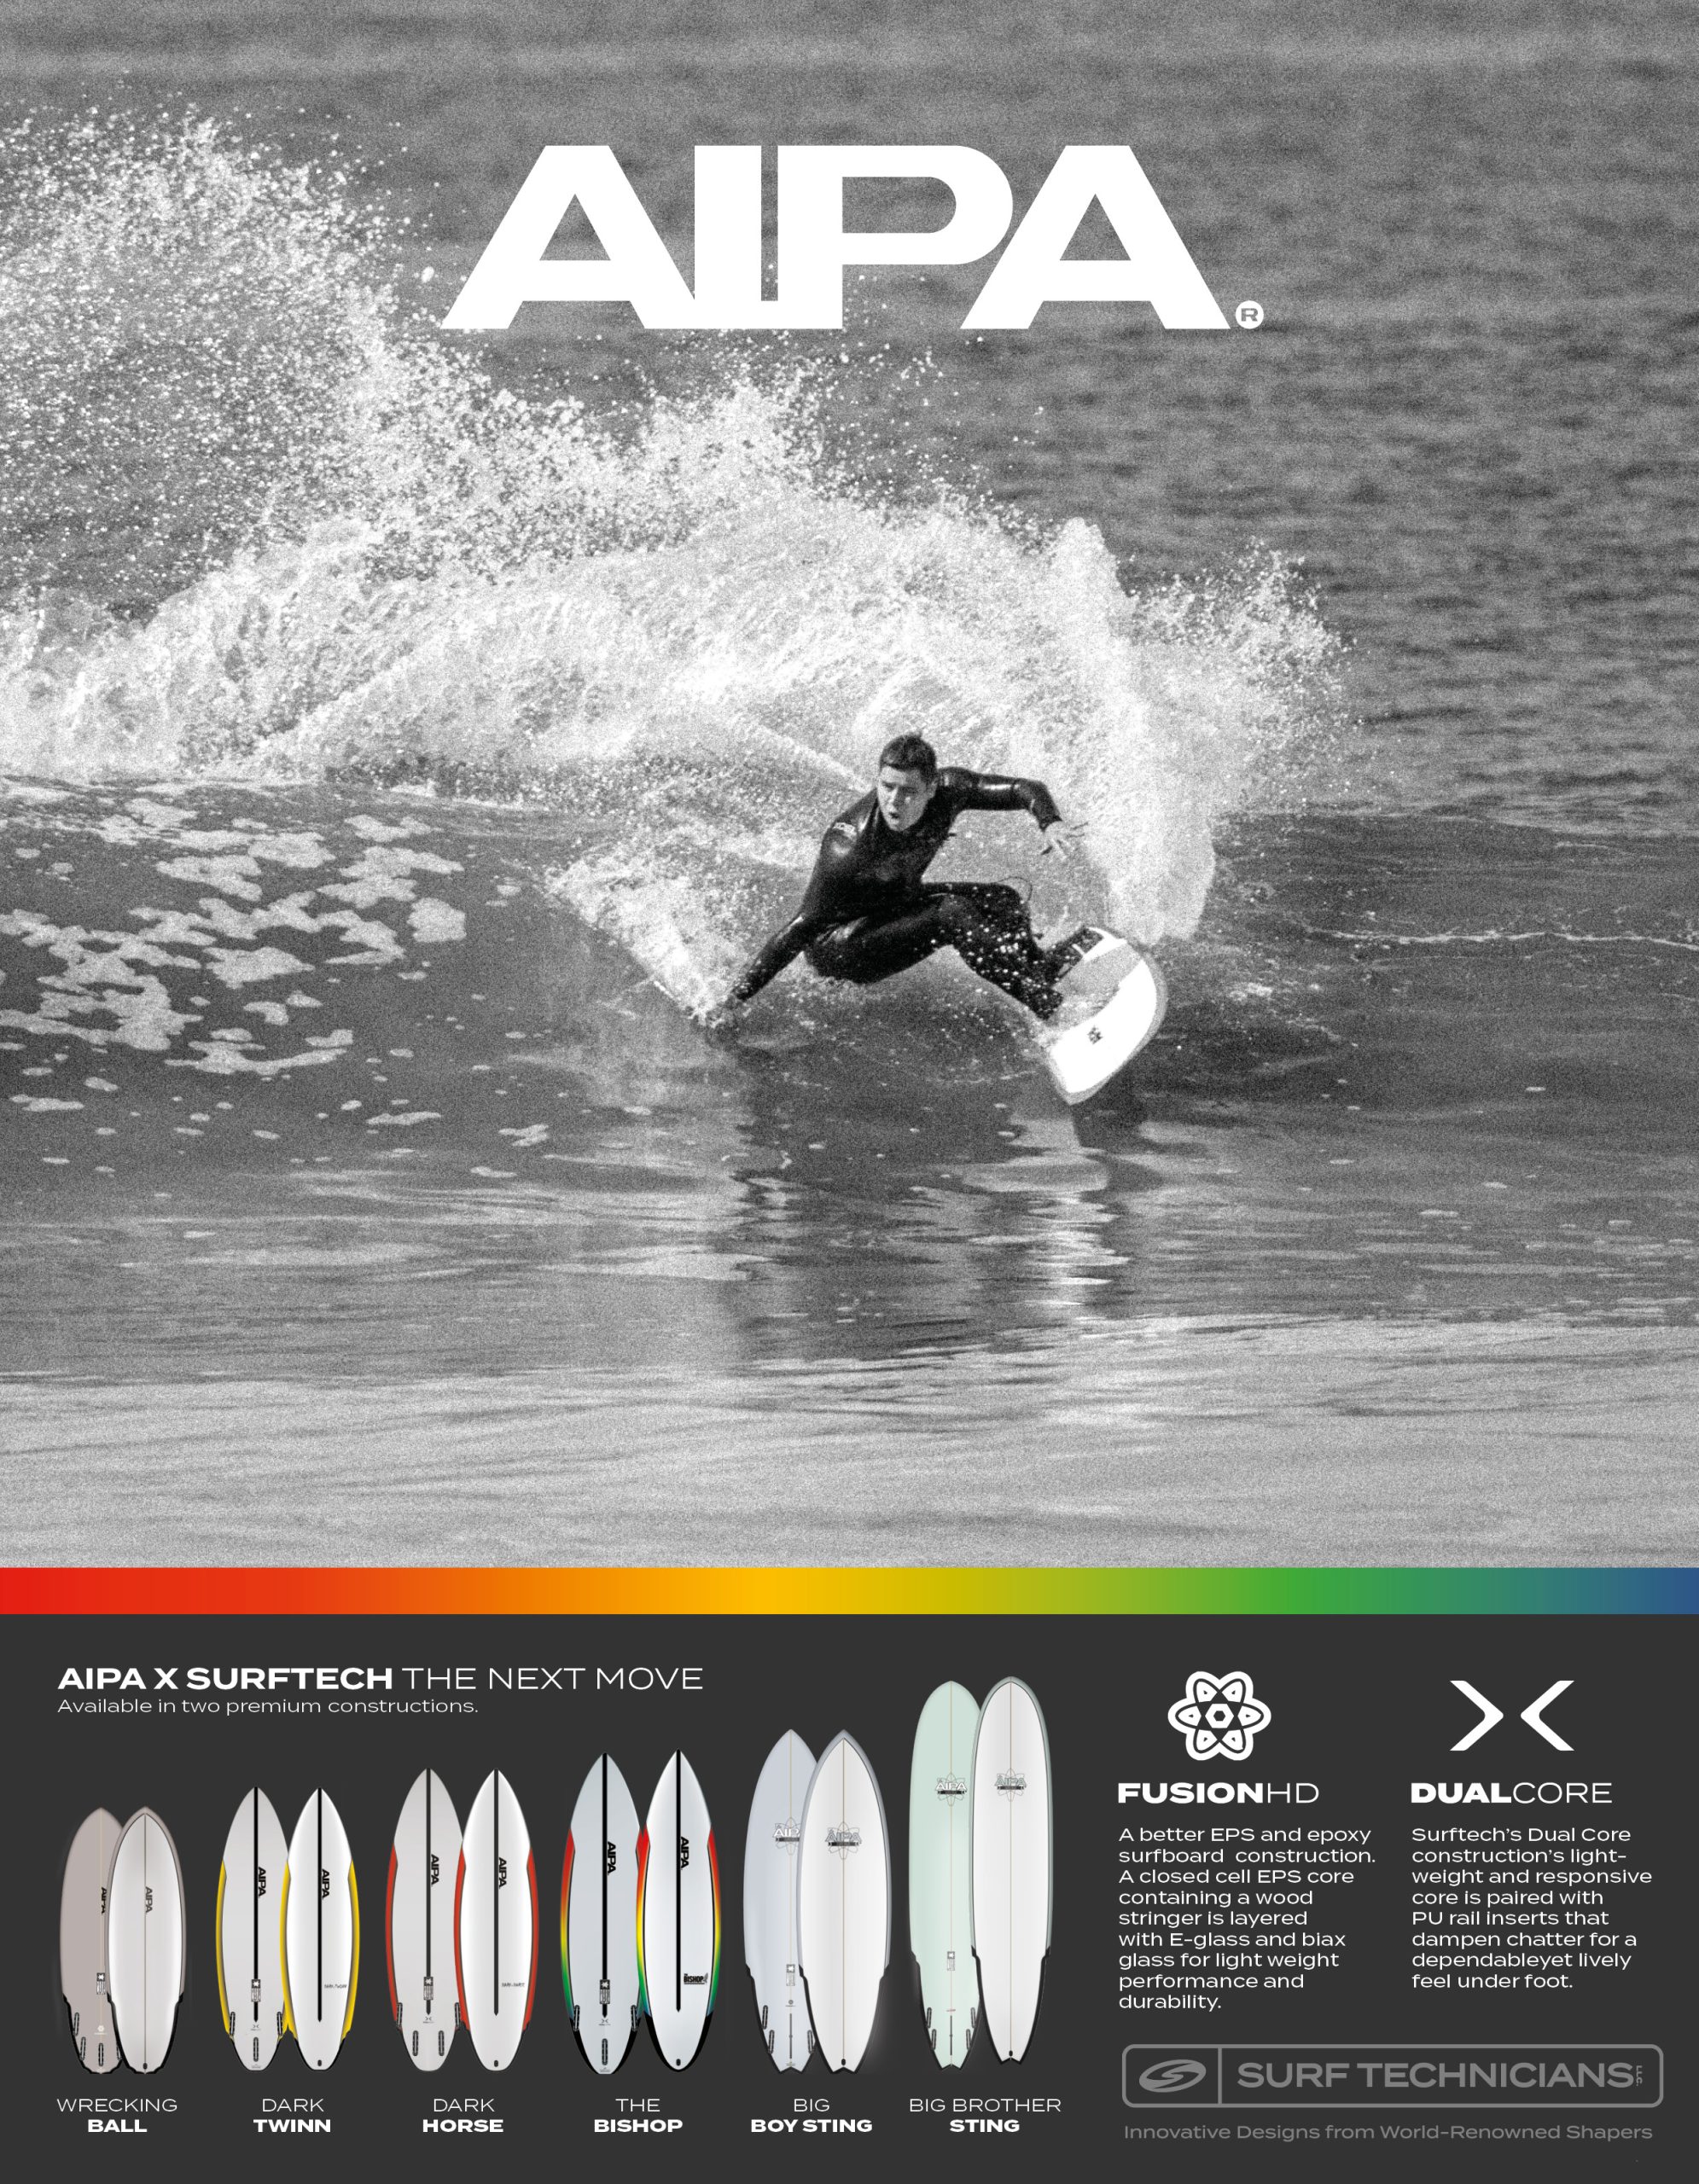 116 Surftech Surfboards